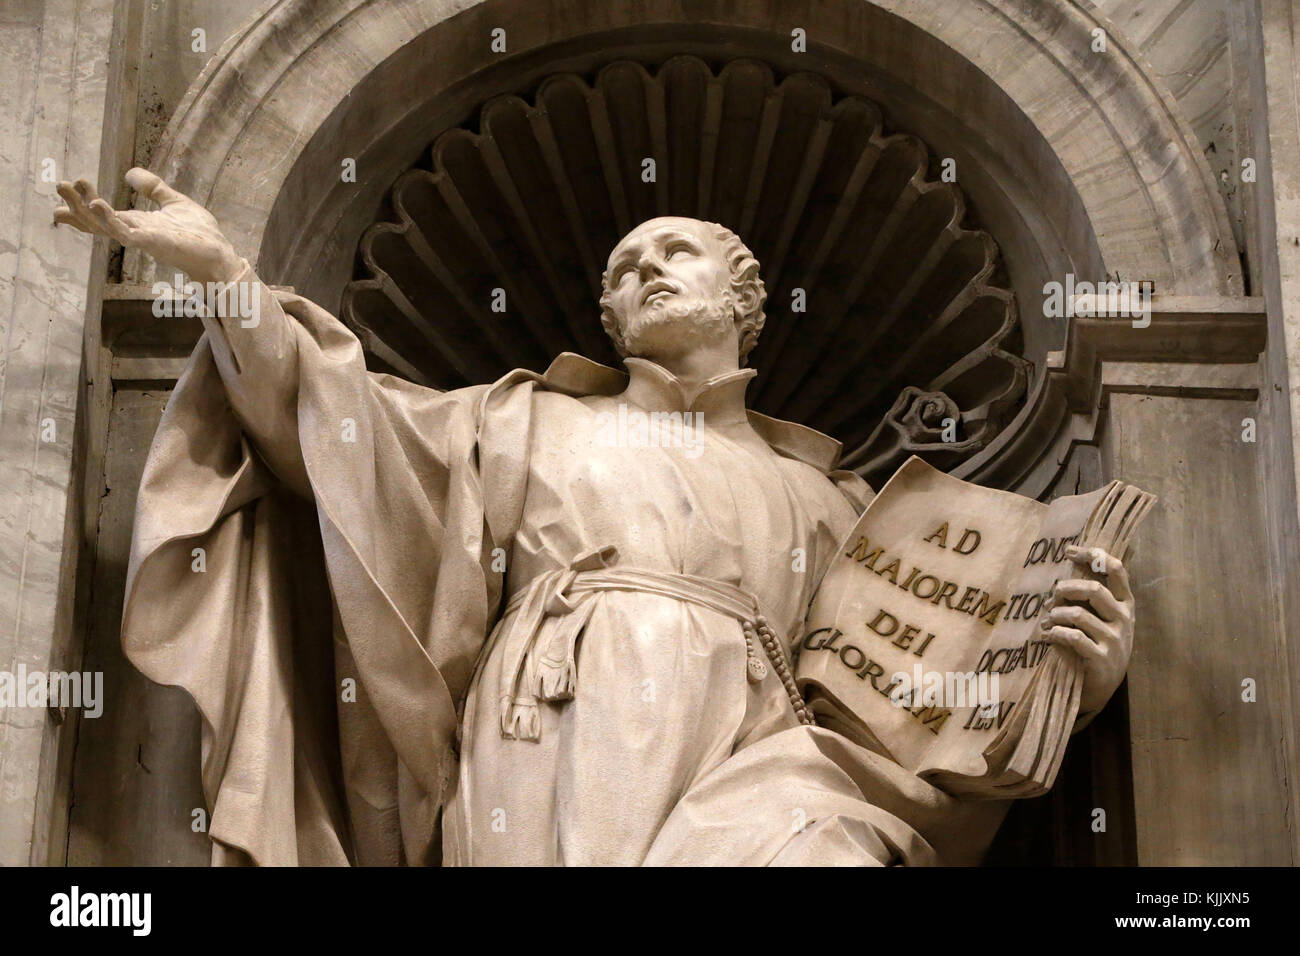 Statue in St Peter's basilica, Rome. Saint Ignatius of Loyola. Italy. Stock Photo